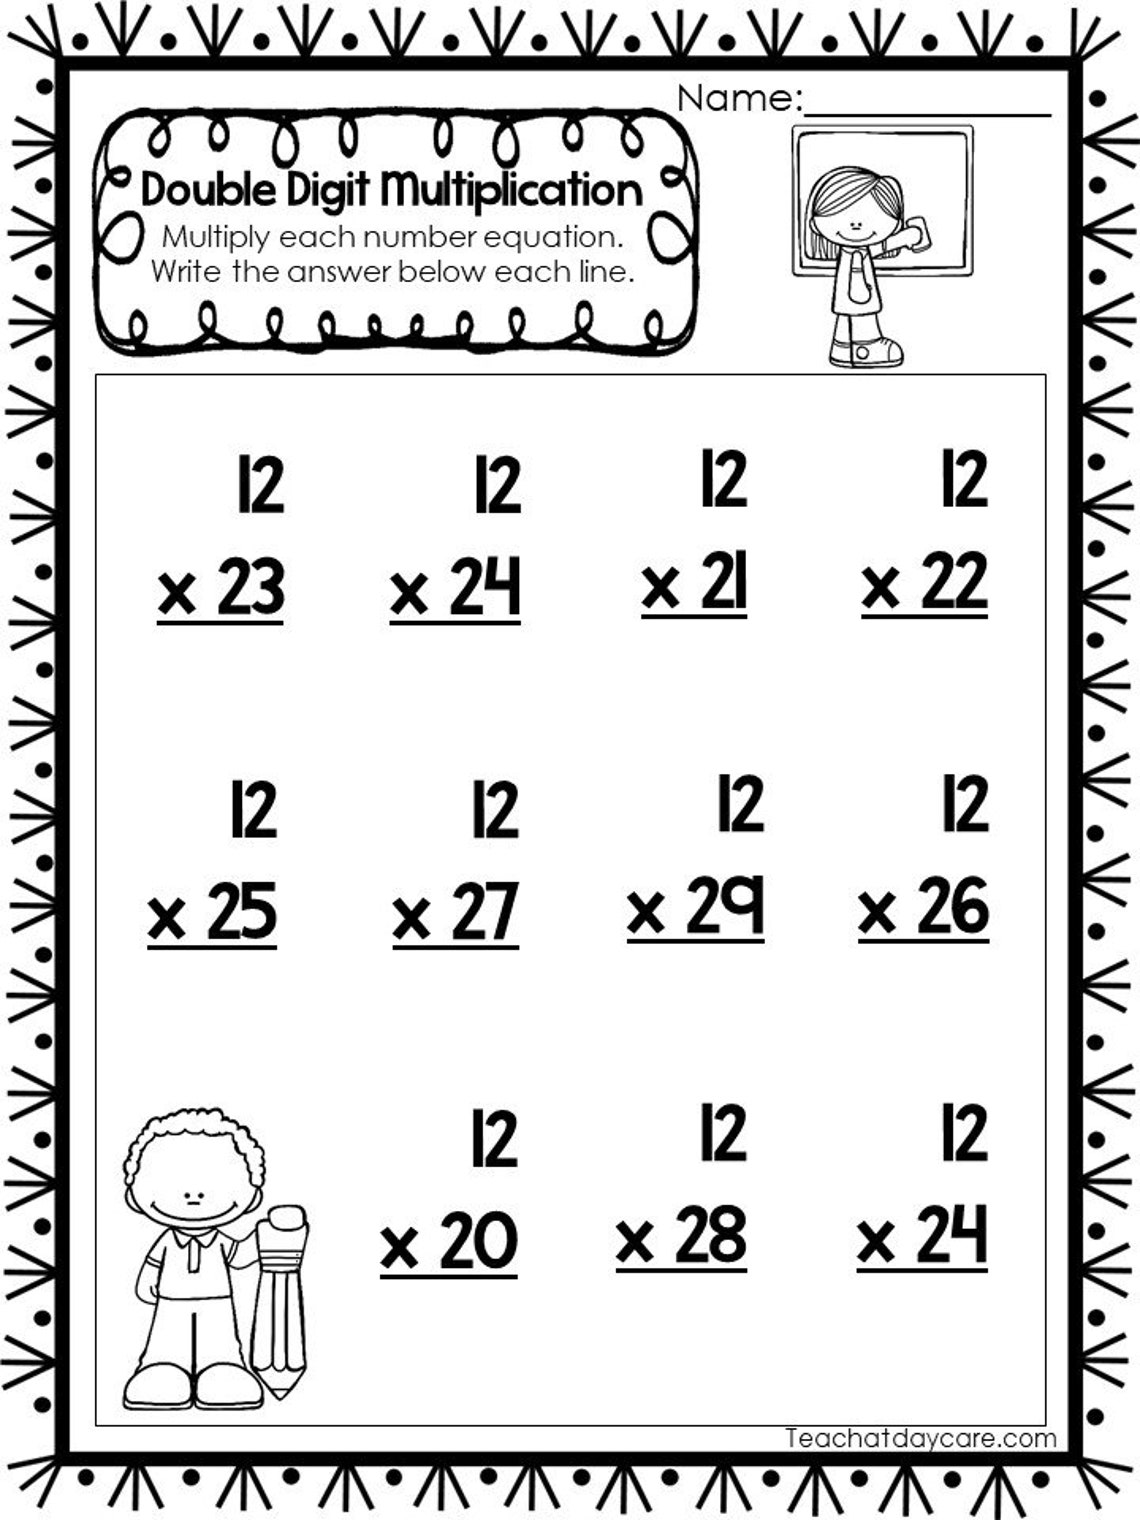 35-double-digit-multiplication-worksheets-etsy